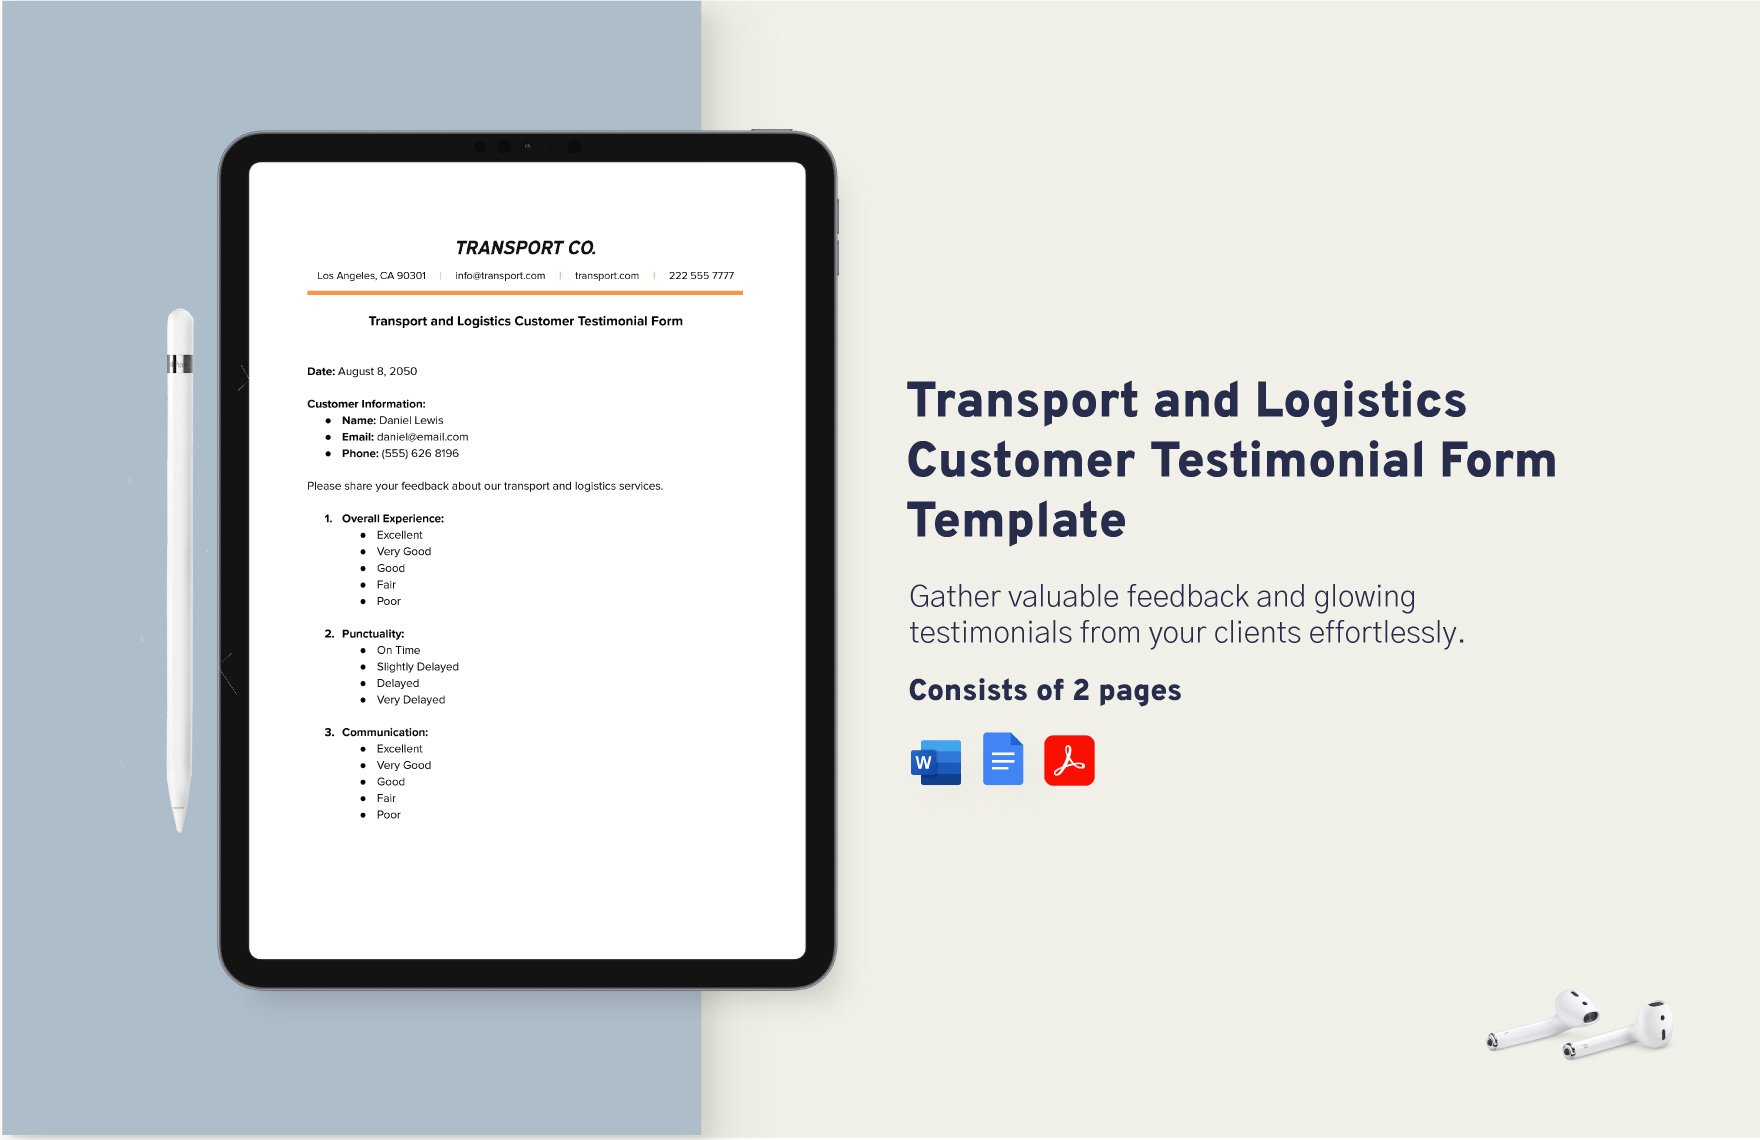 Transport and Logistics Customer Testimonial Form Template